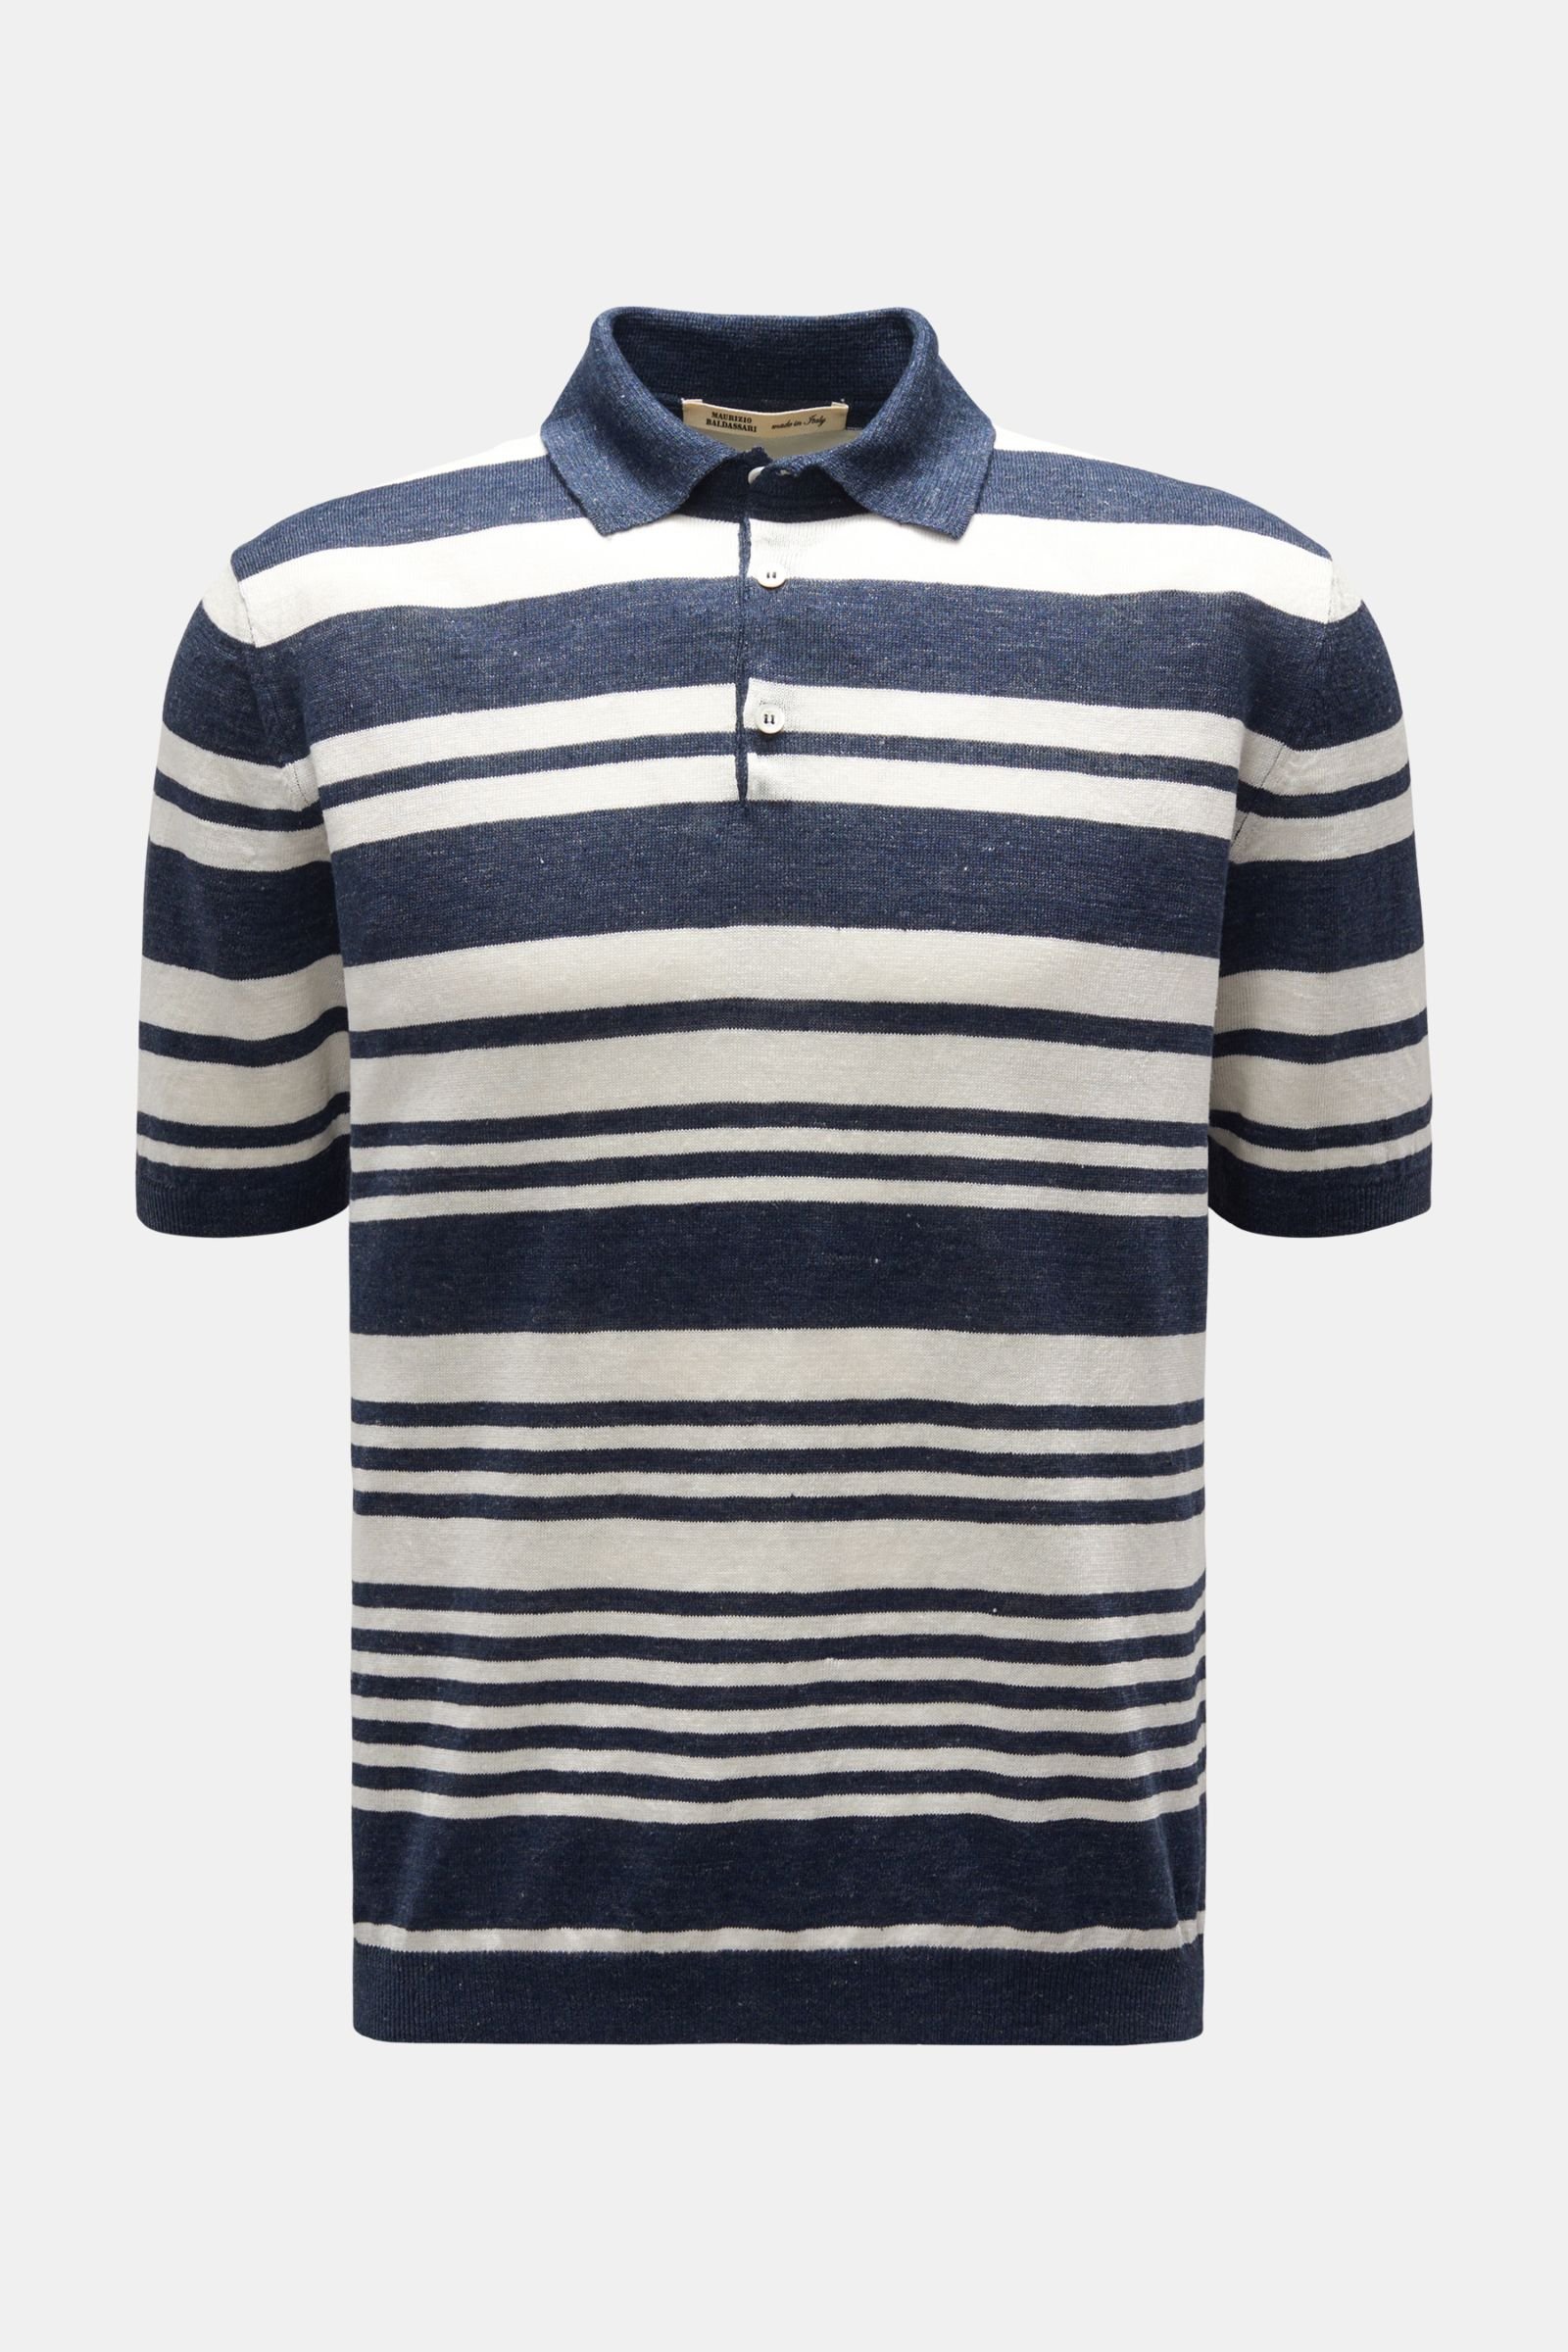 Linen short sleeve knit polo navy/white striped